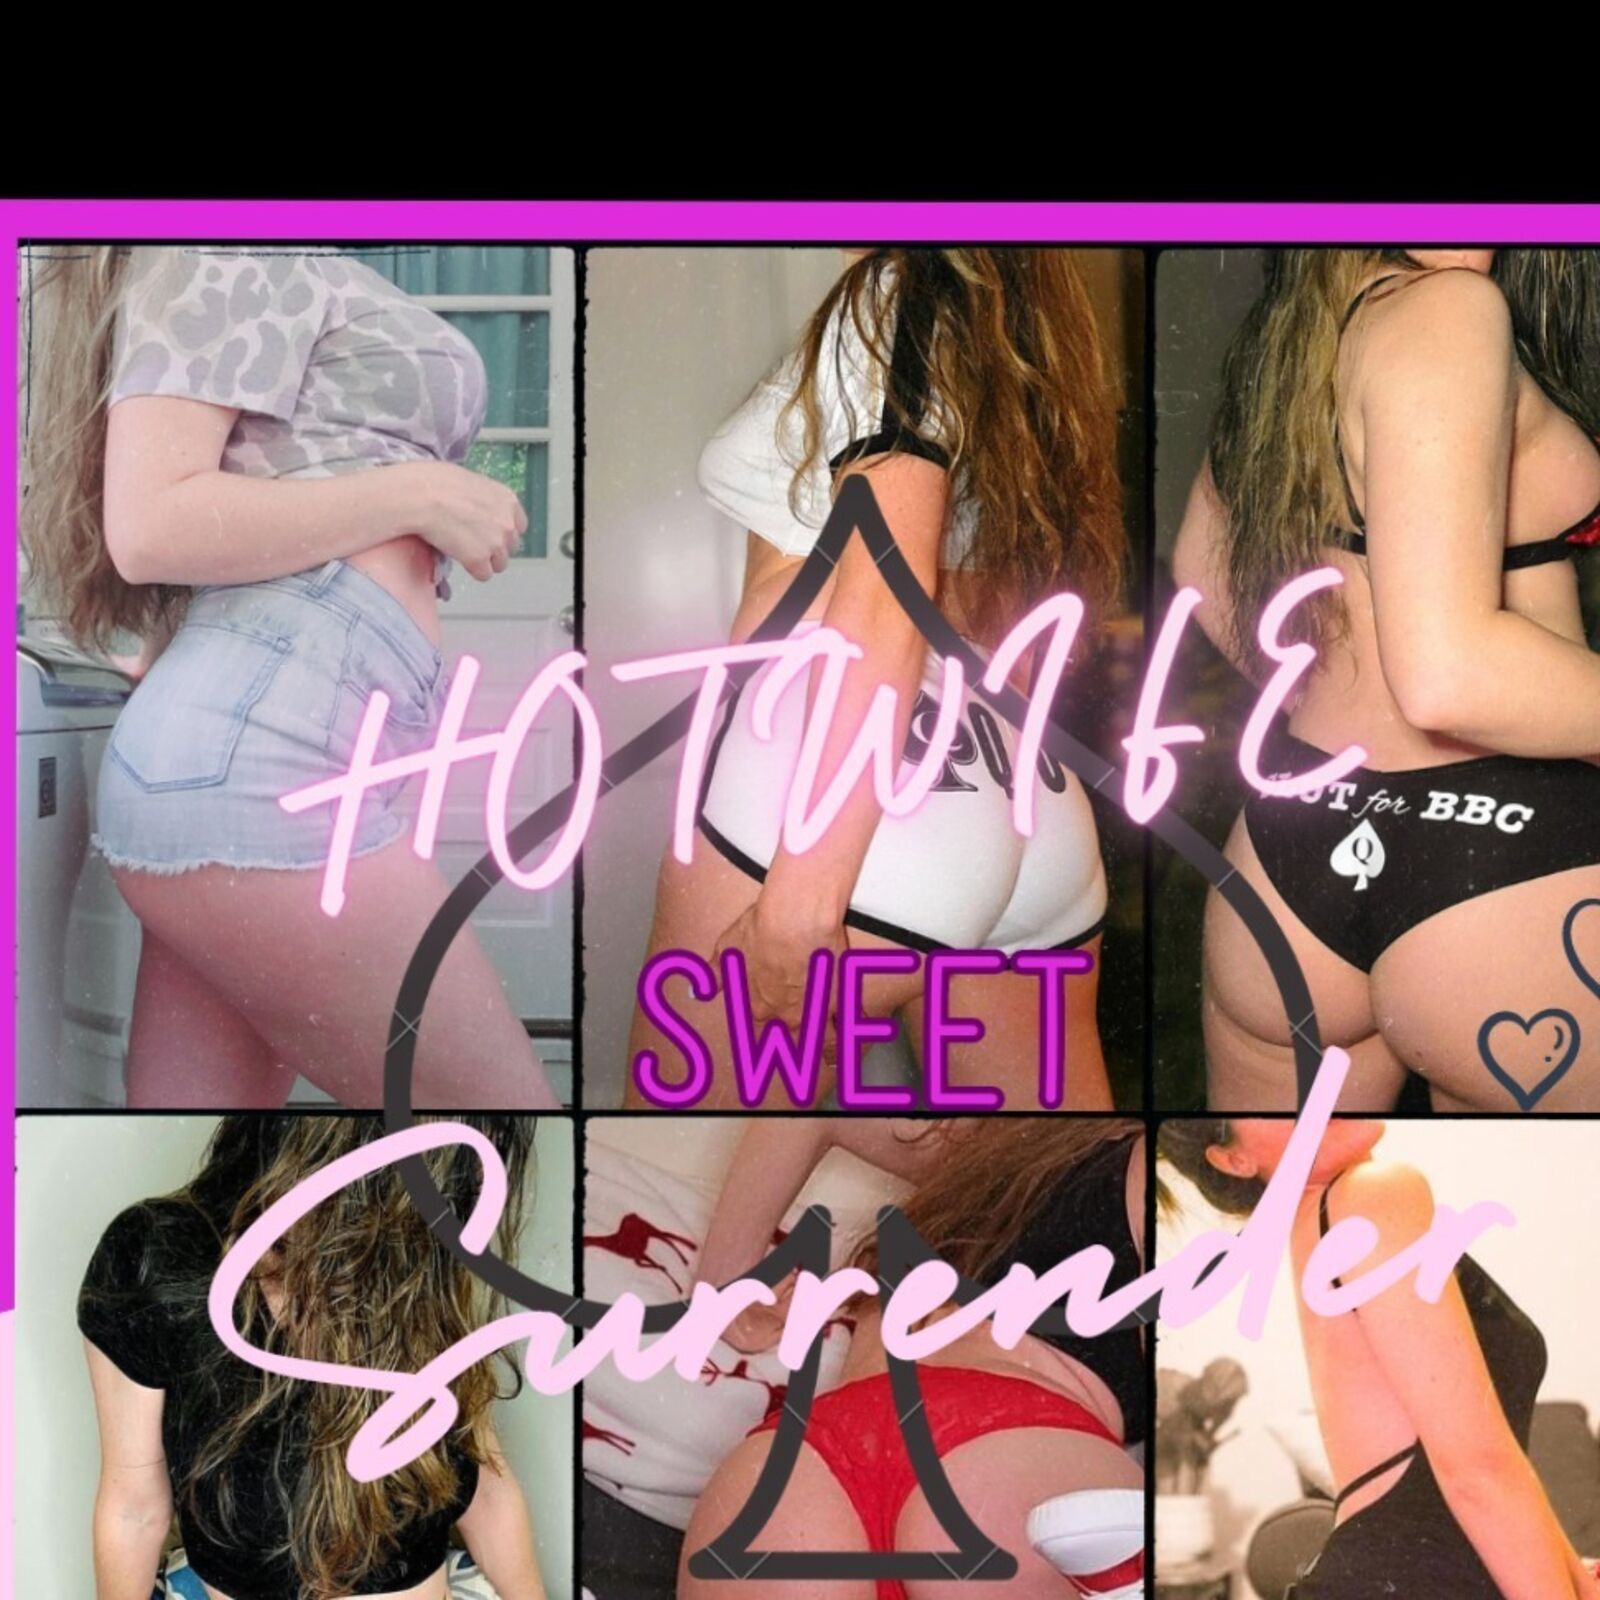 See Hotwife Sweet Surrender profile